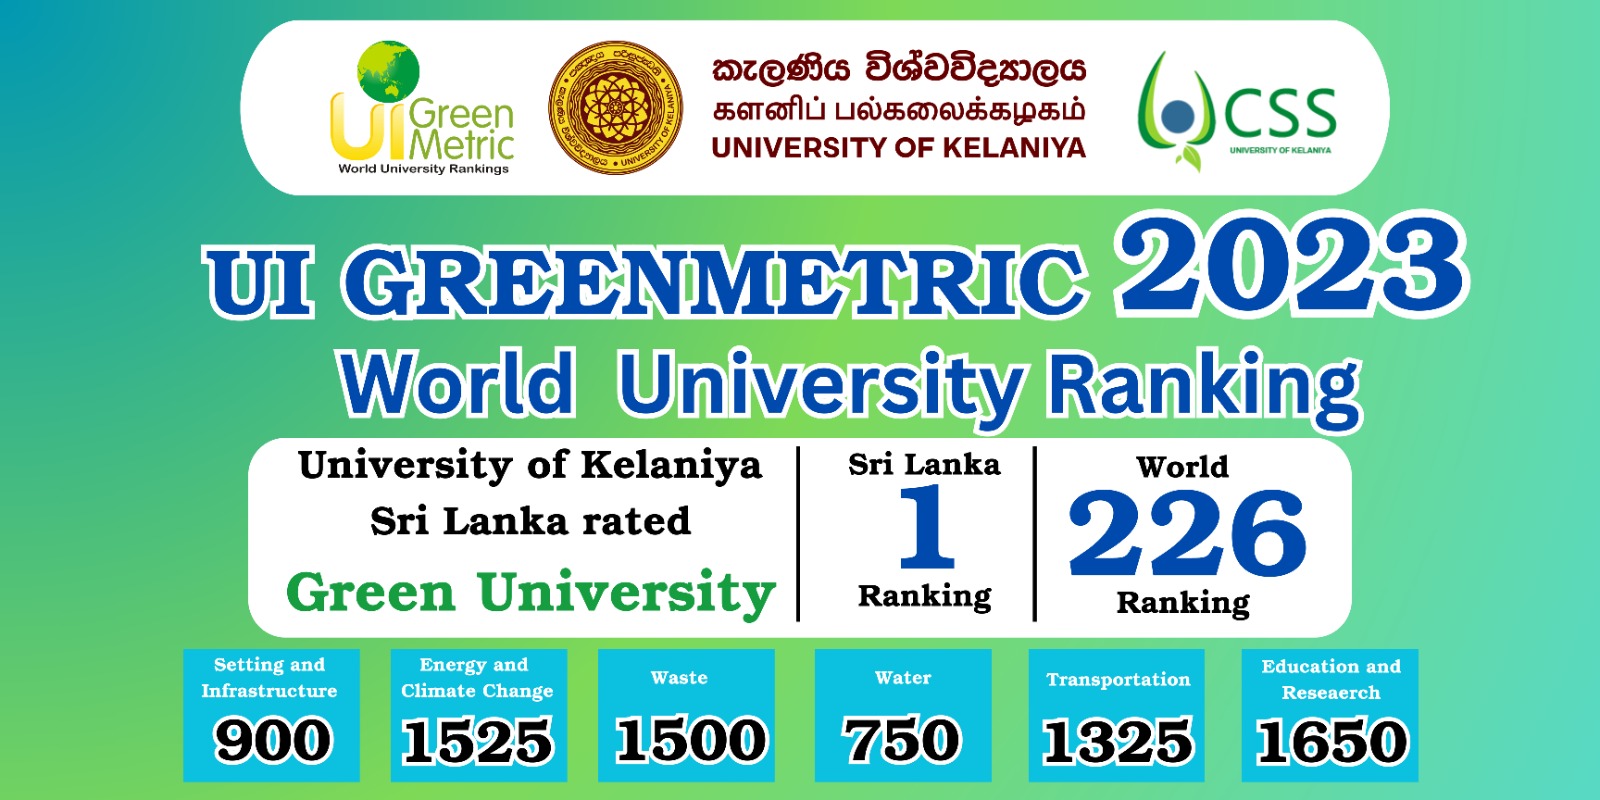 The University of Kelaniya leads Sri Lanka in UI GreenMetric Ranking 2023